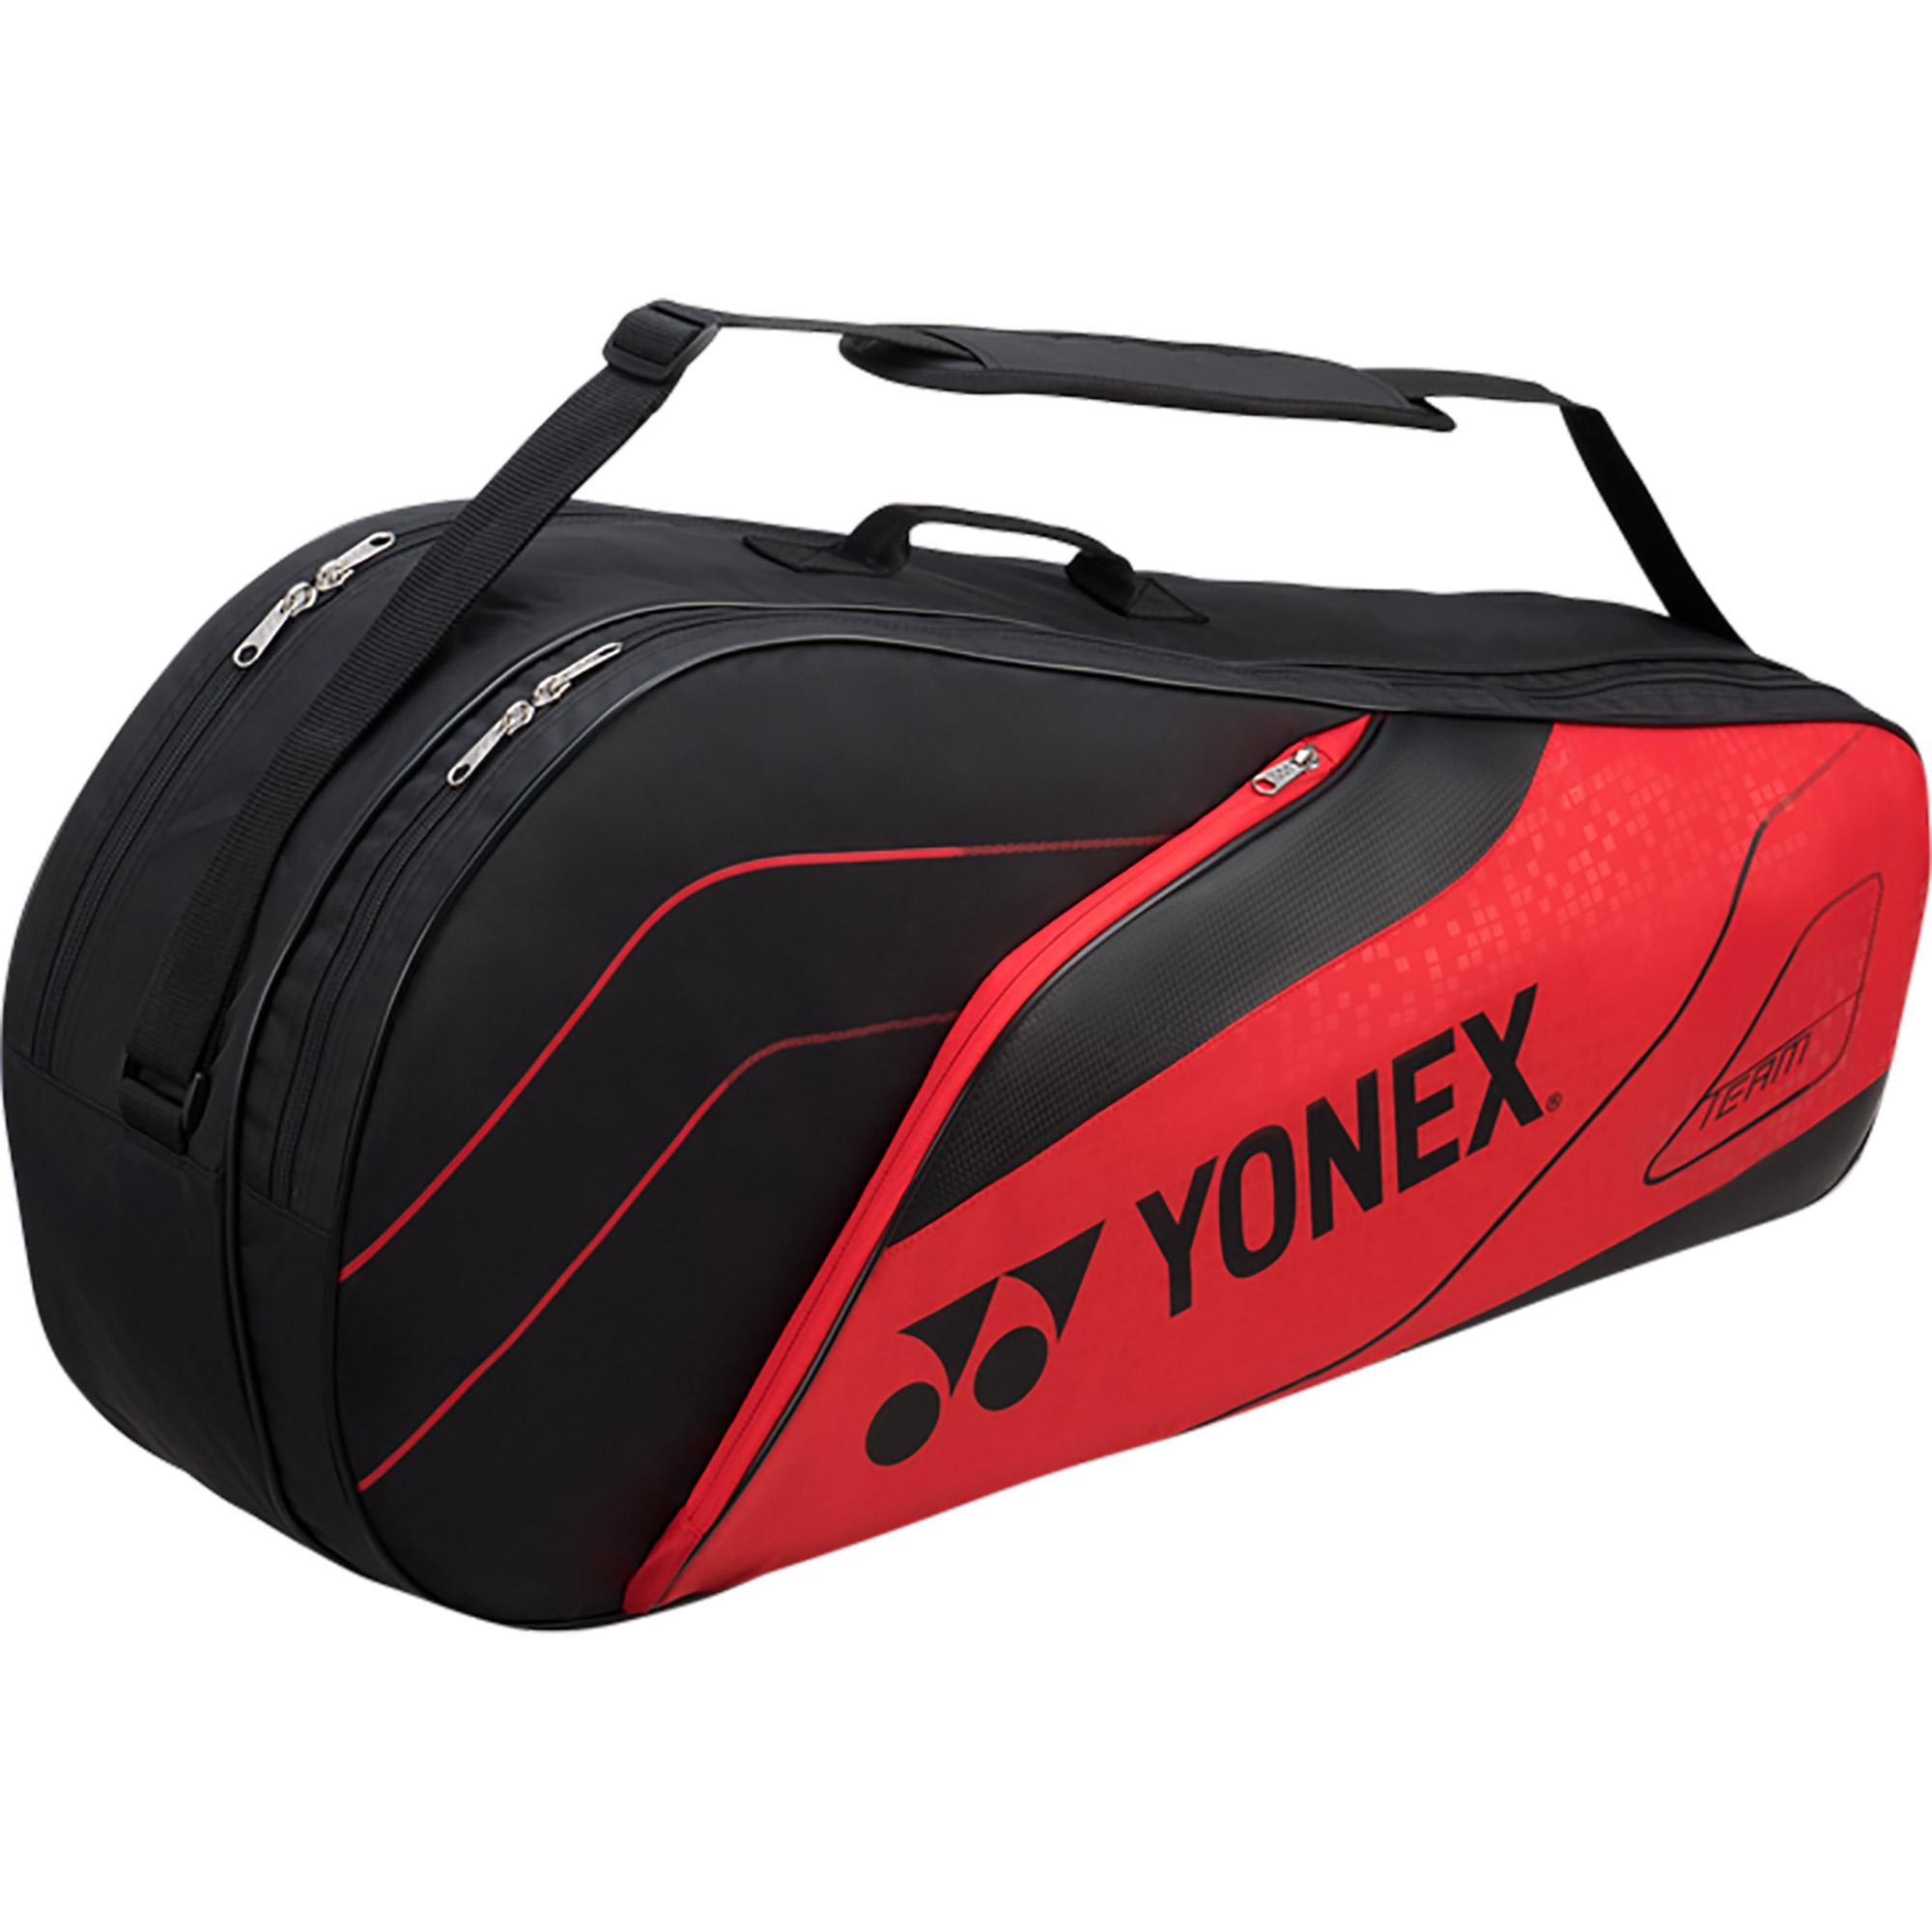 Сумка для бадминтона. Сумка Yonex Bag-9631ex. Сумка для ракеток Yonex 4826ex (Black/Lime). Для бадминтона сумка сумка Yonex. Сумка Yonex 42023 (Red).